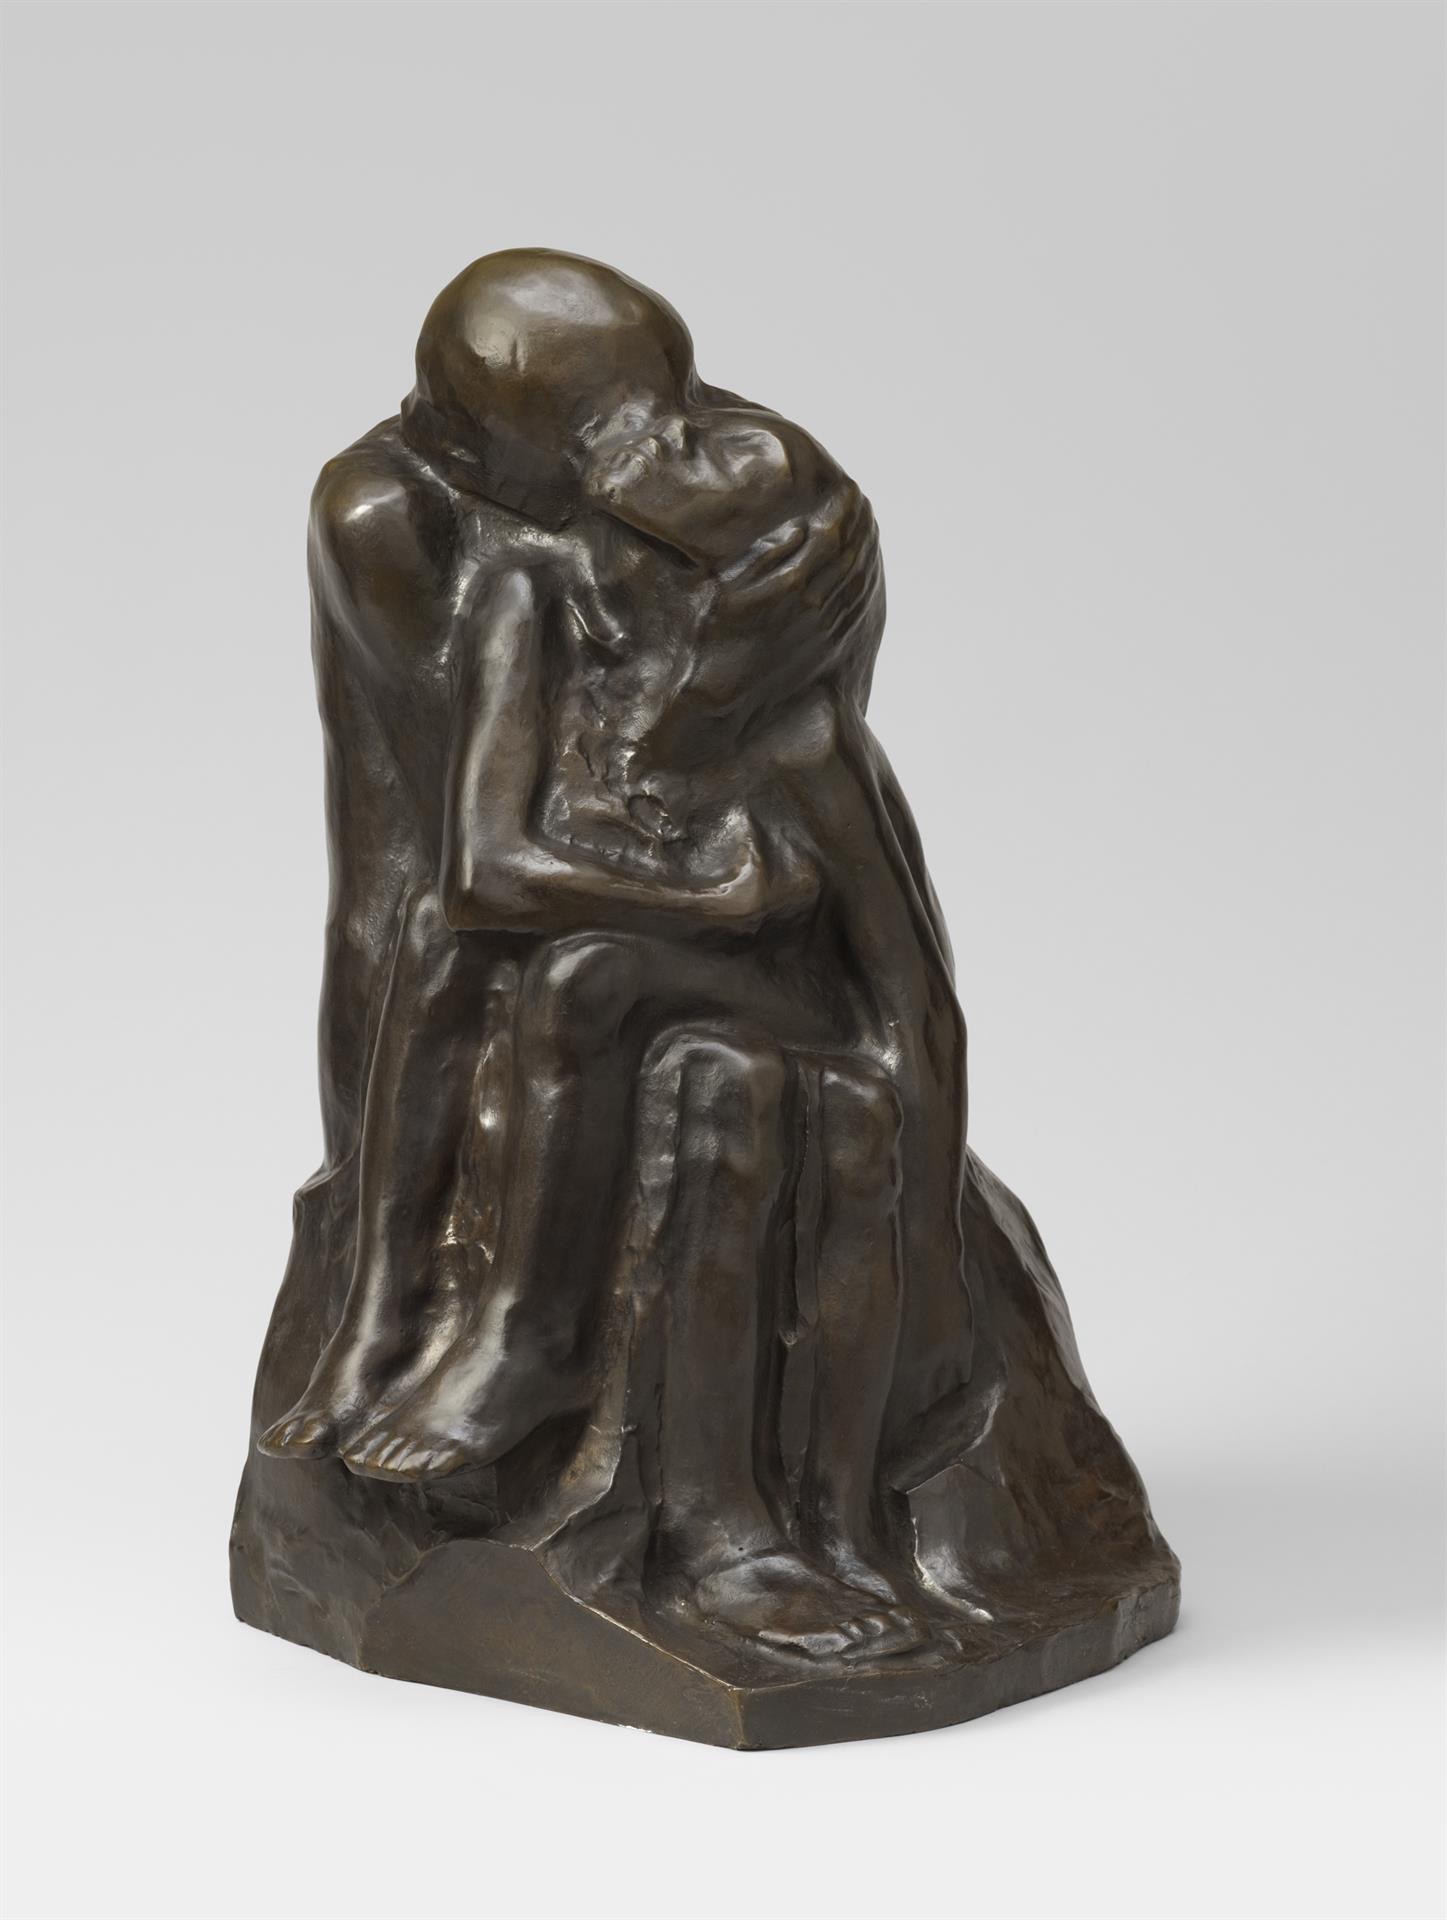 Käthe Kollwitz, Couple amoureux, 1913-15, bronze, Seeler 13. II.B.9., Collection Kollwitz de Cologne © Käthe Kollwitz Museum Köln